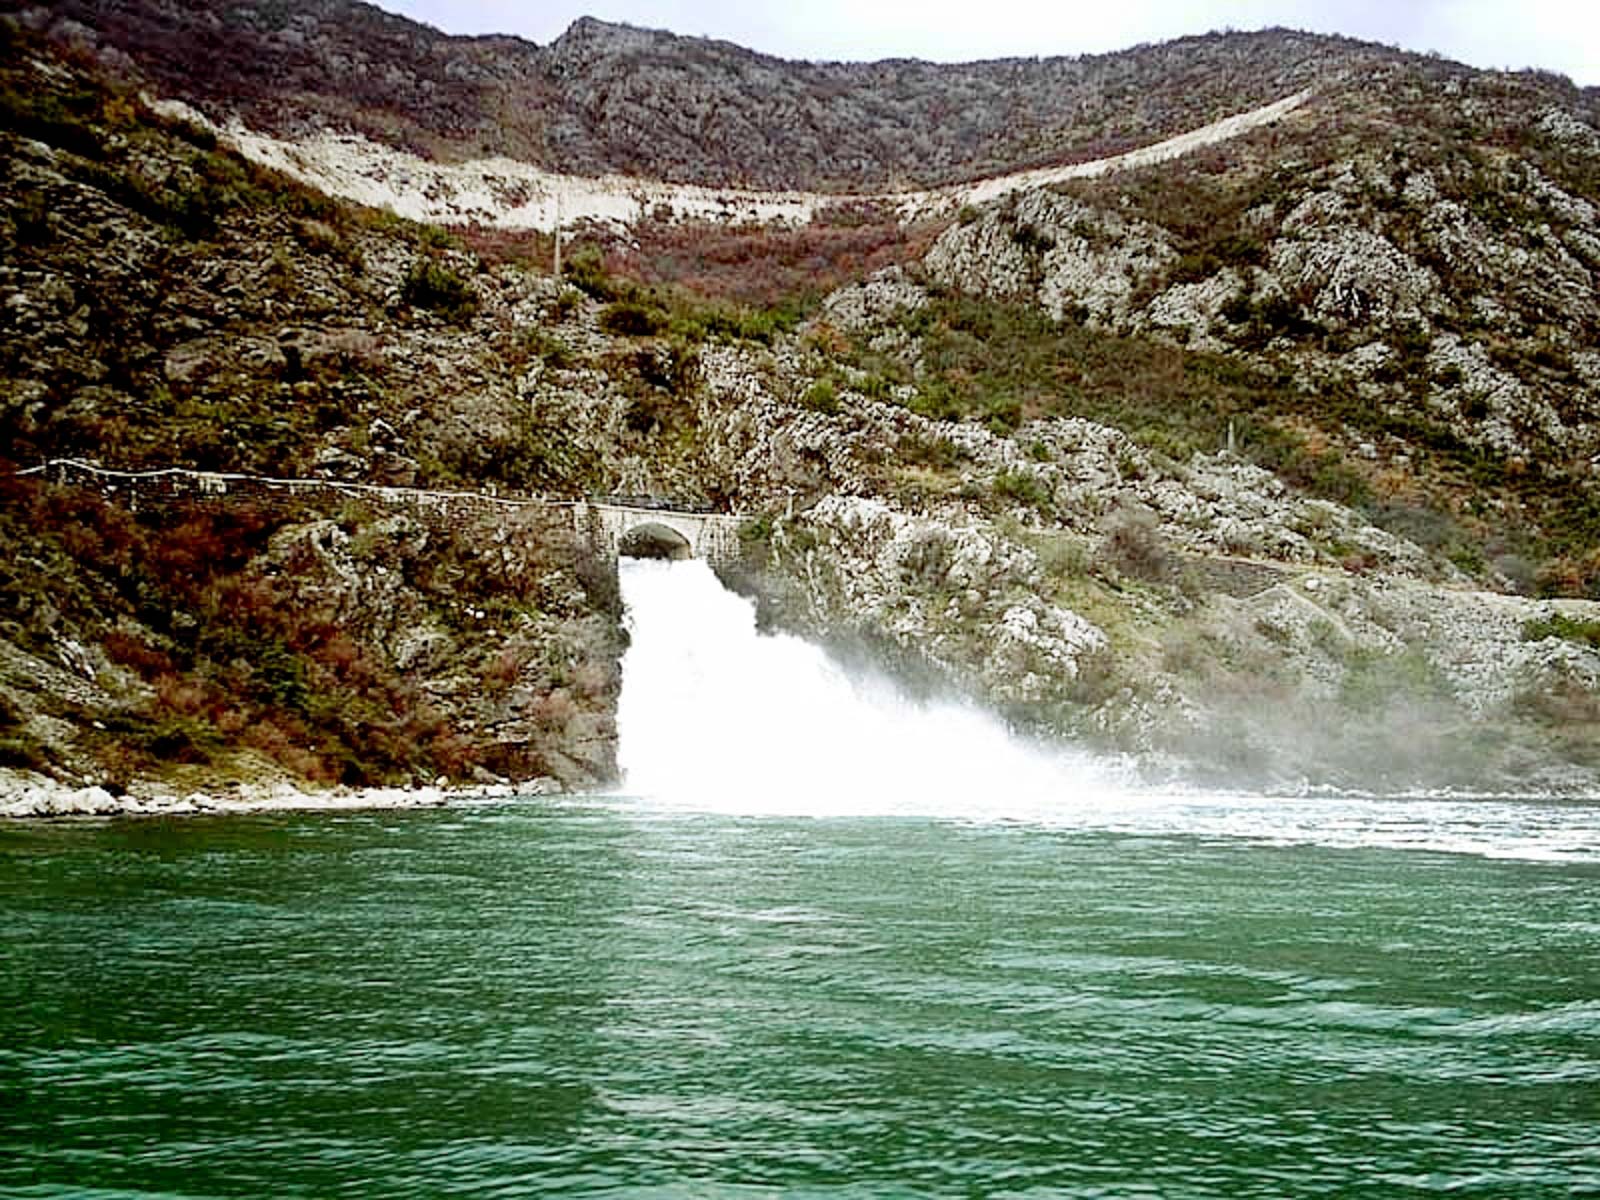 Orjenski Vodopad (https://de.wikipedia.org/wiki/Bucht_von_Kotor)